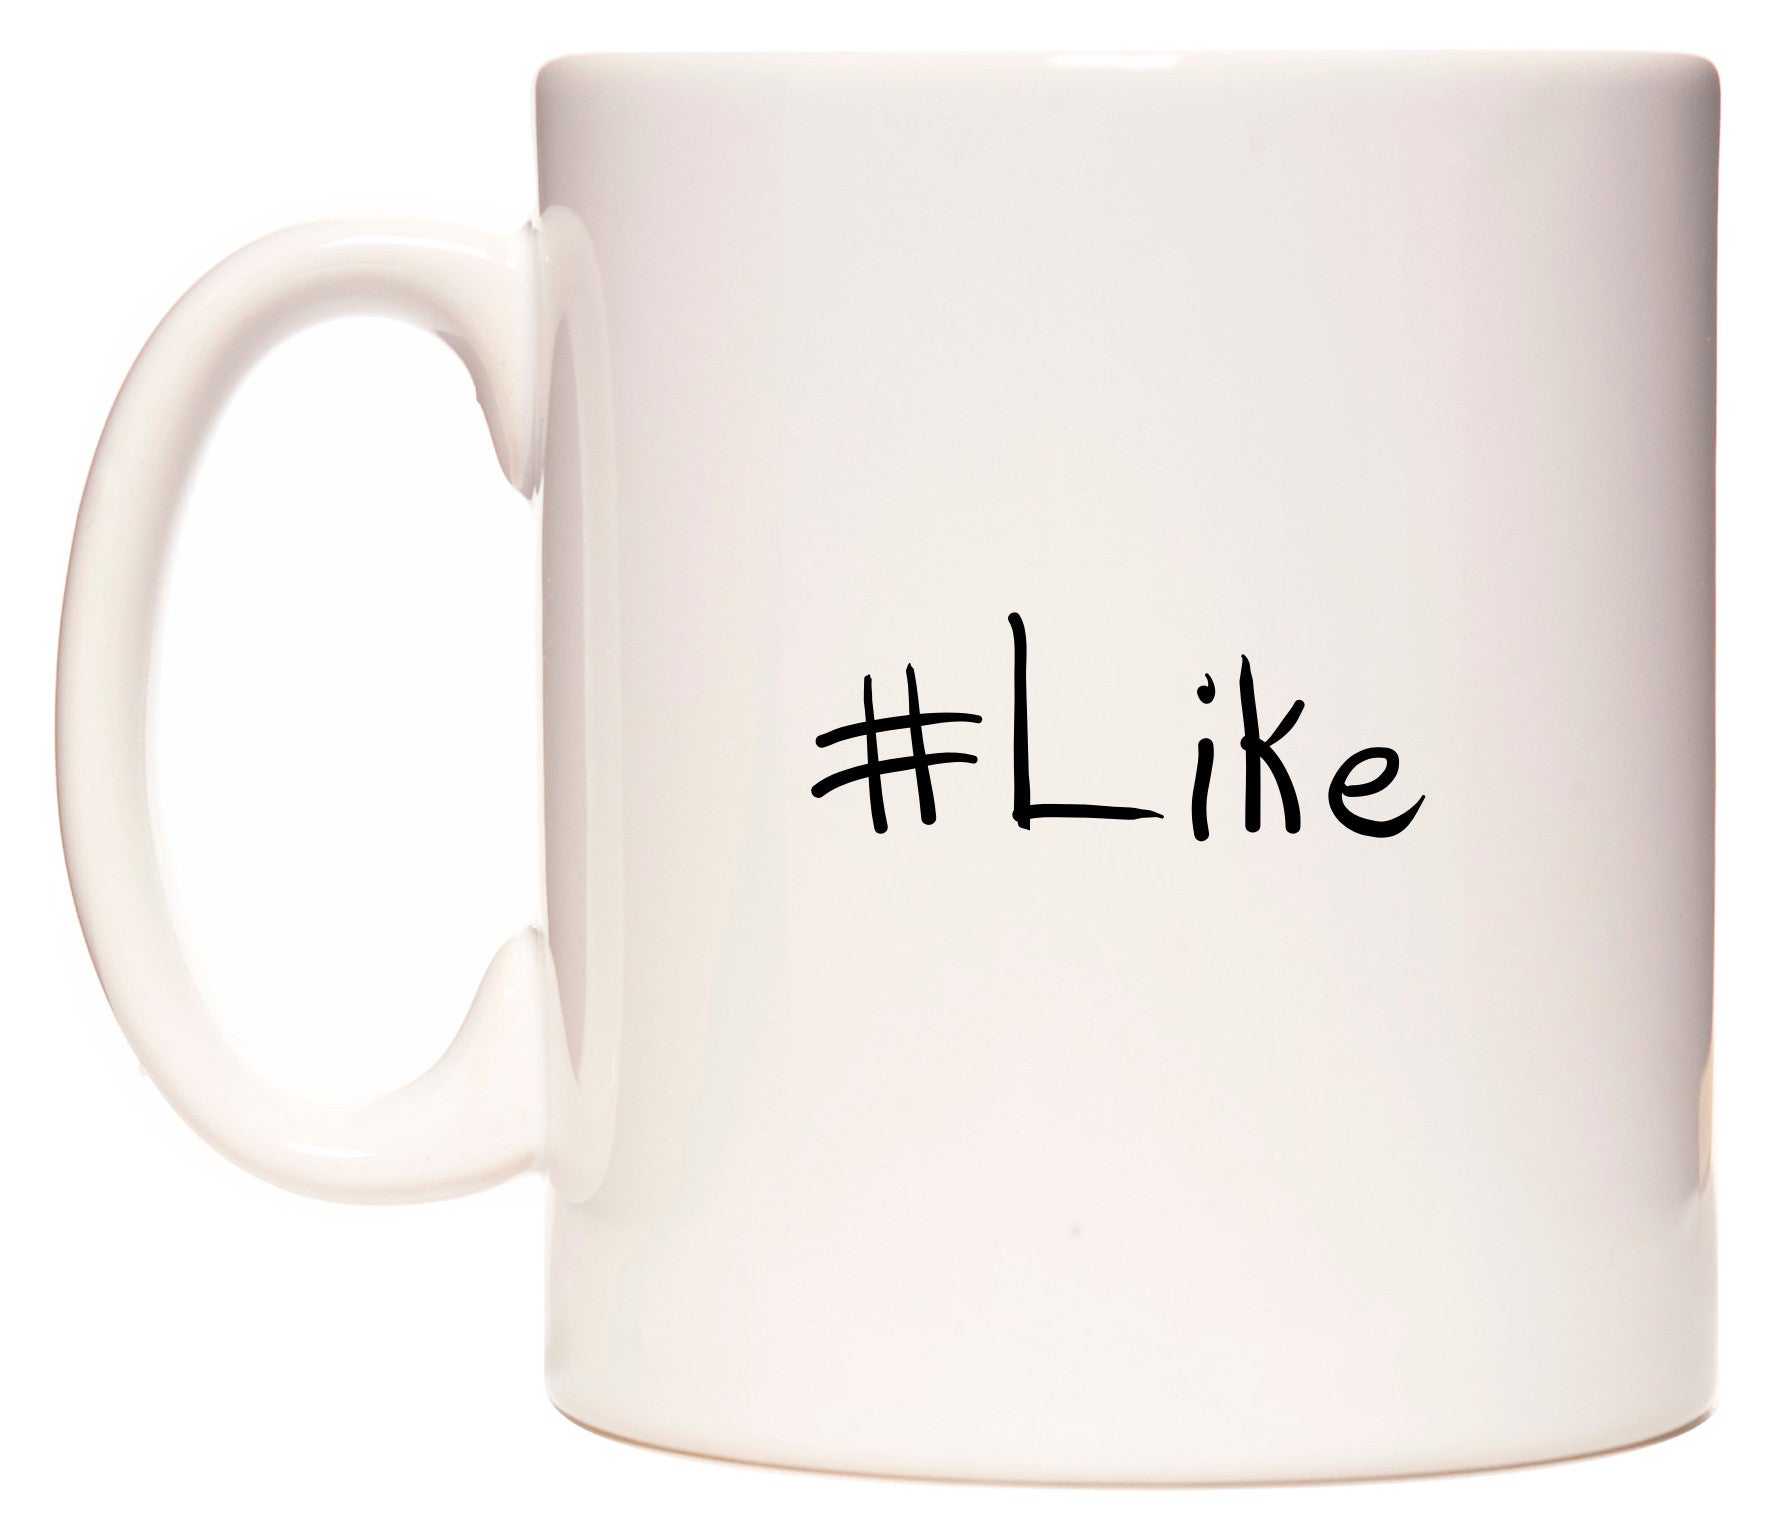 This mug features #Like